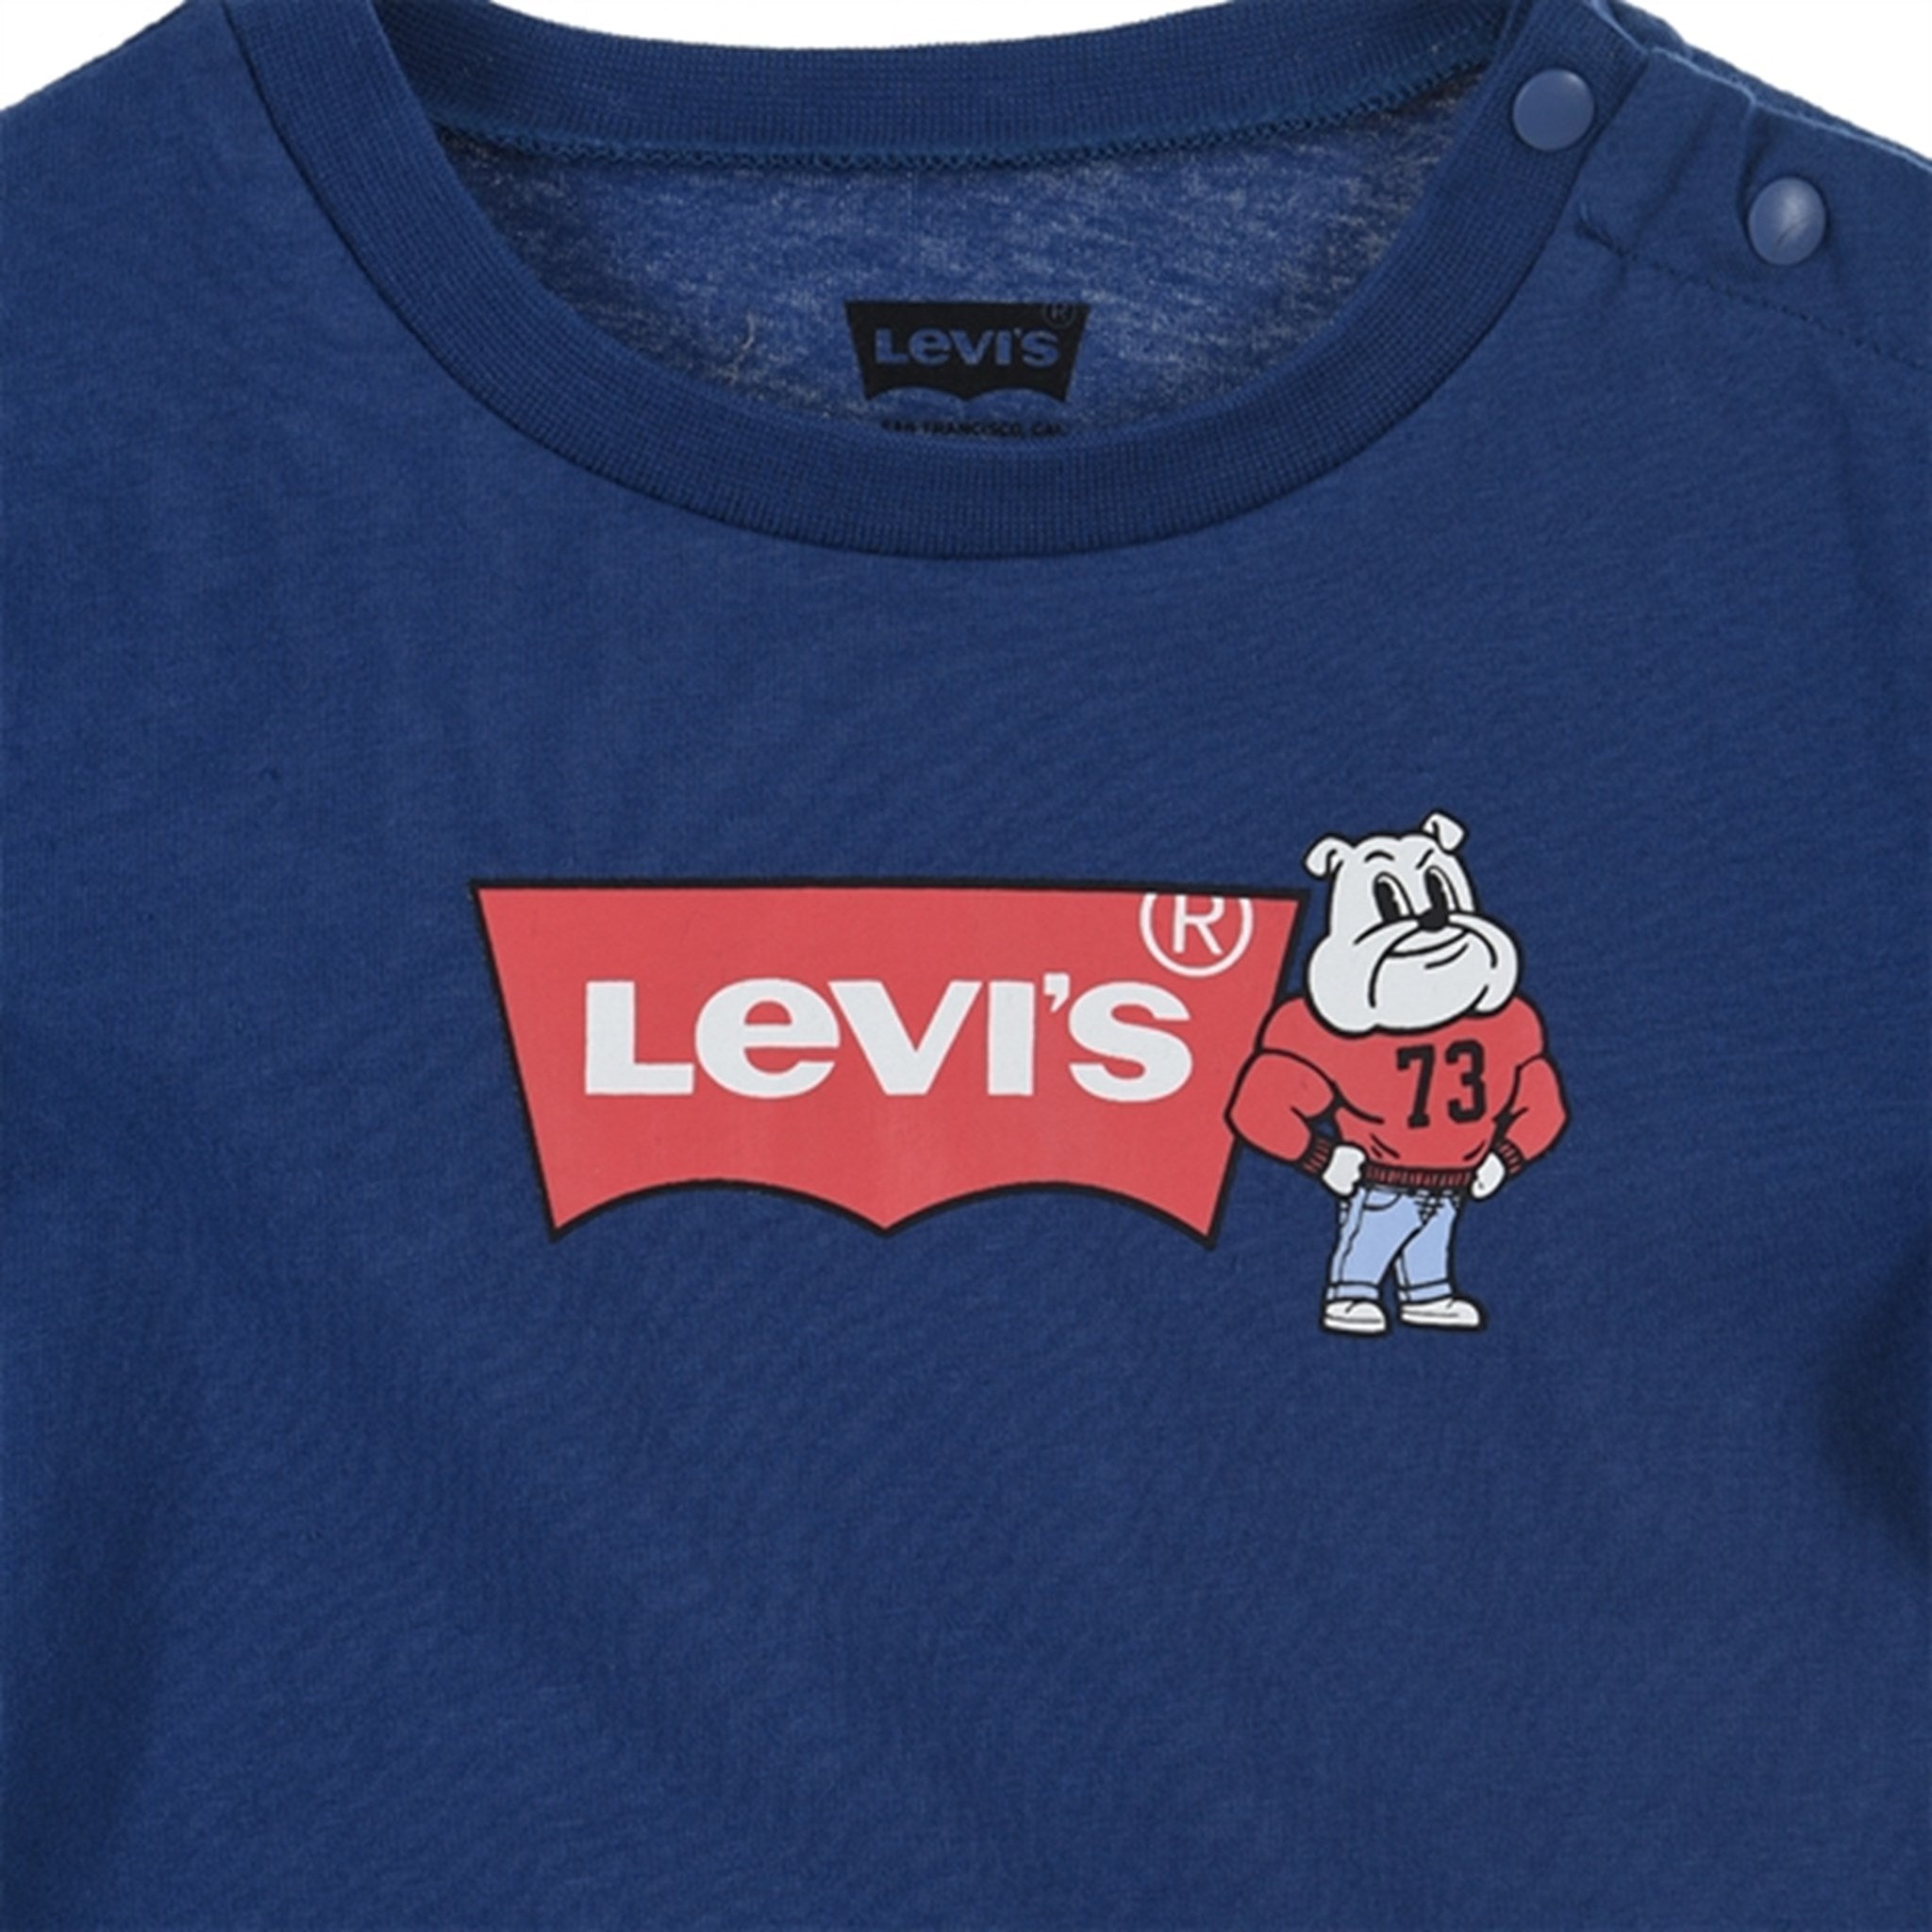 Levi's Mascot Batwing Shorts Sett Blue 3